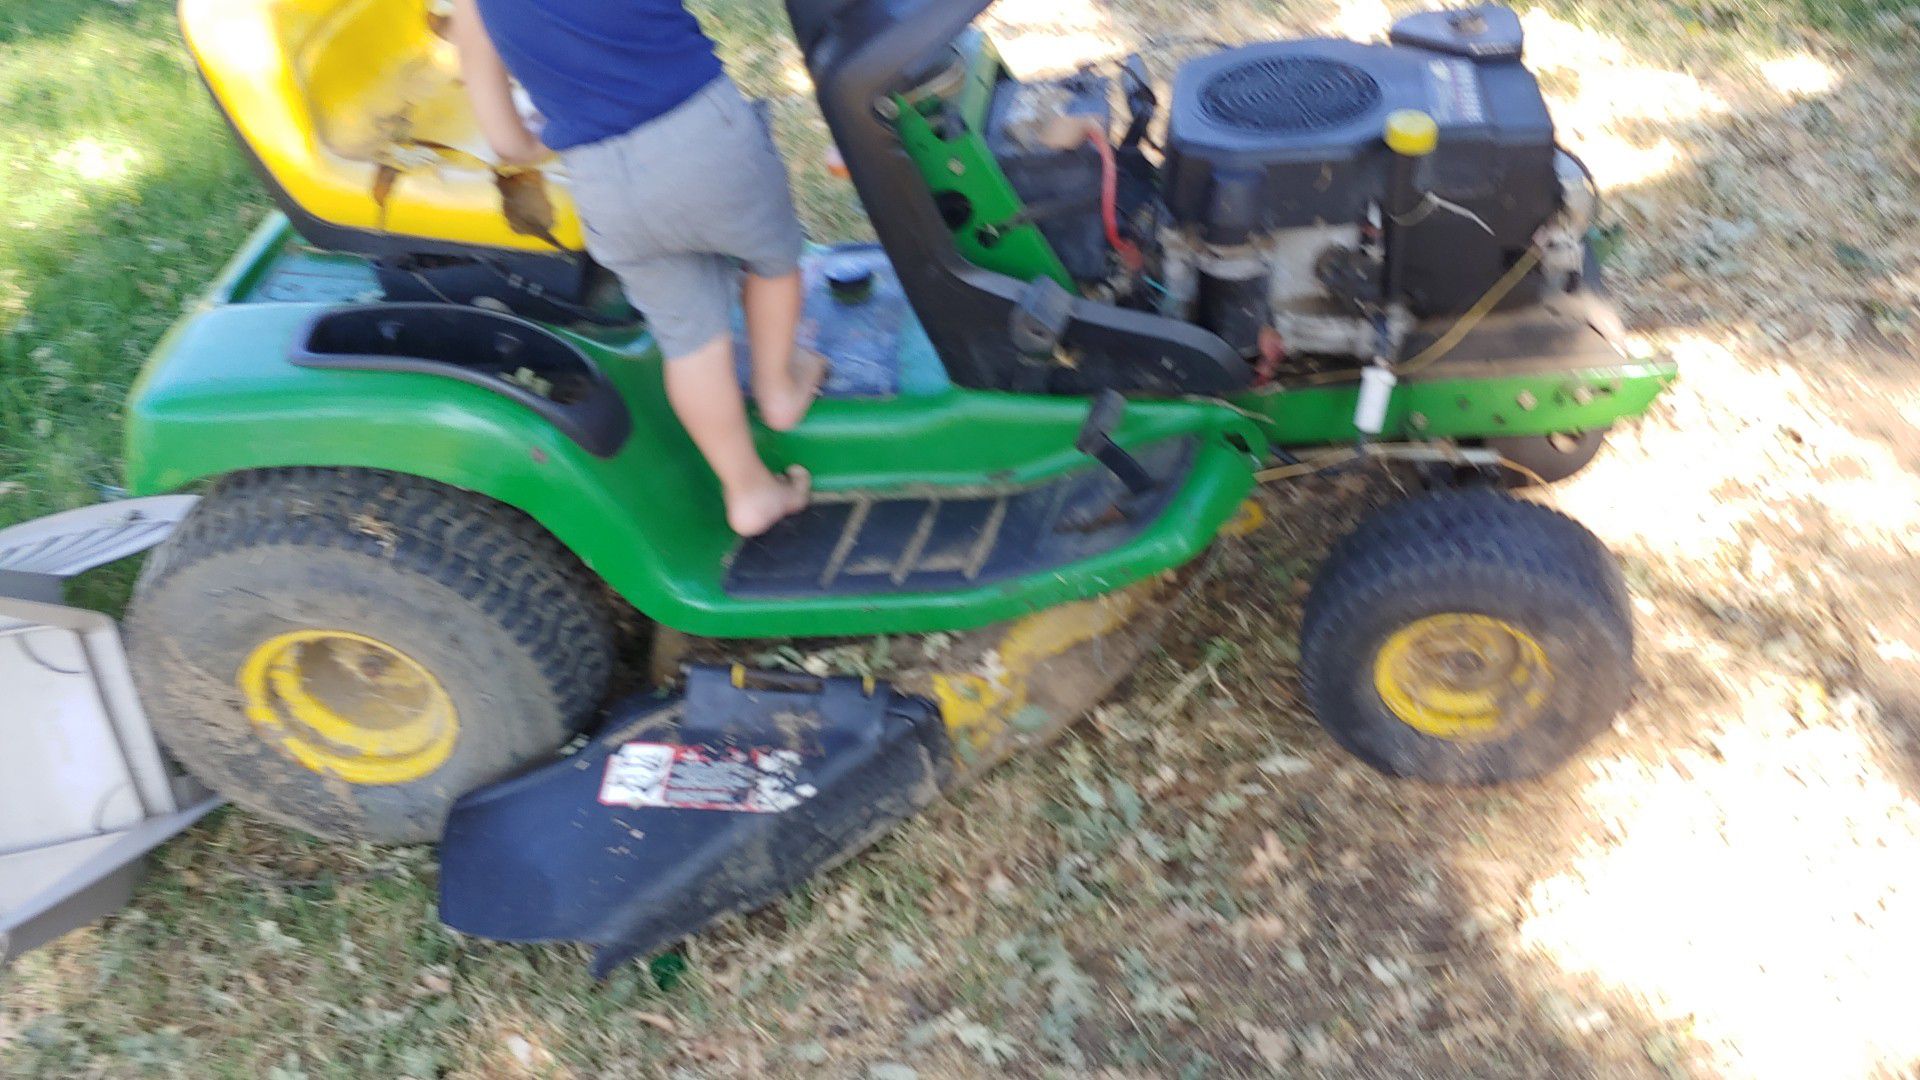 John Deere tractor lawn mower